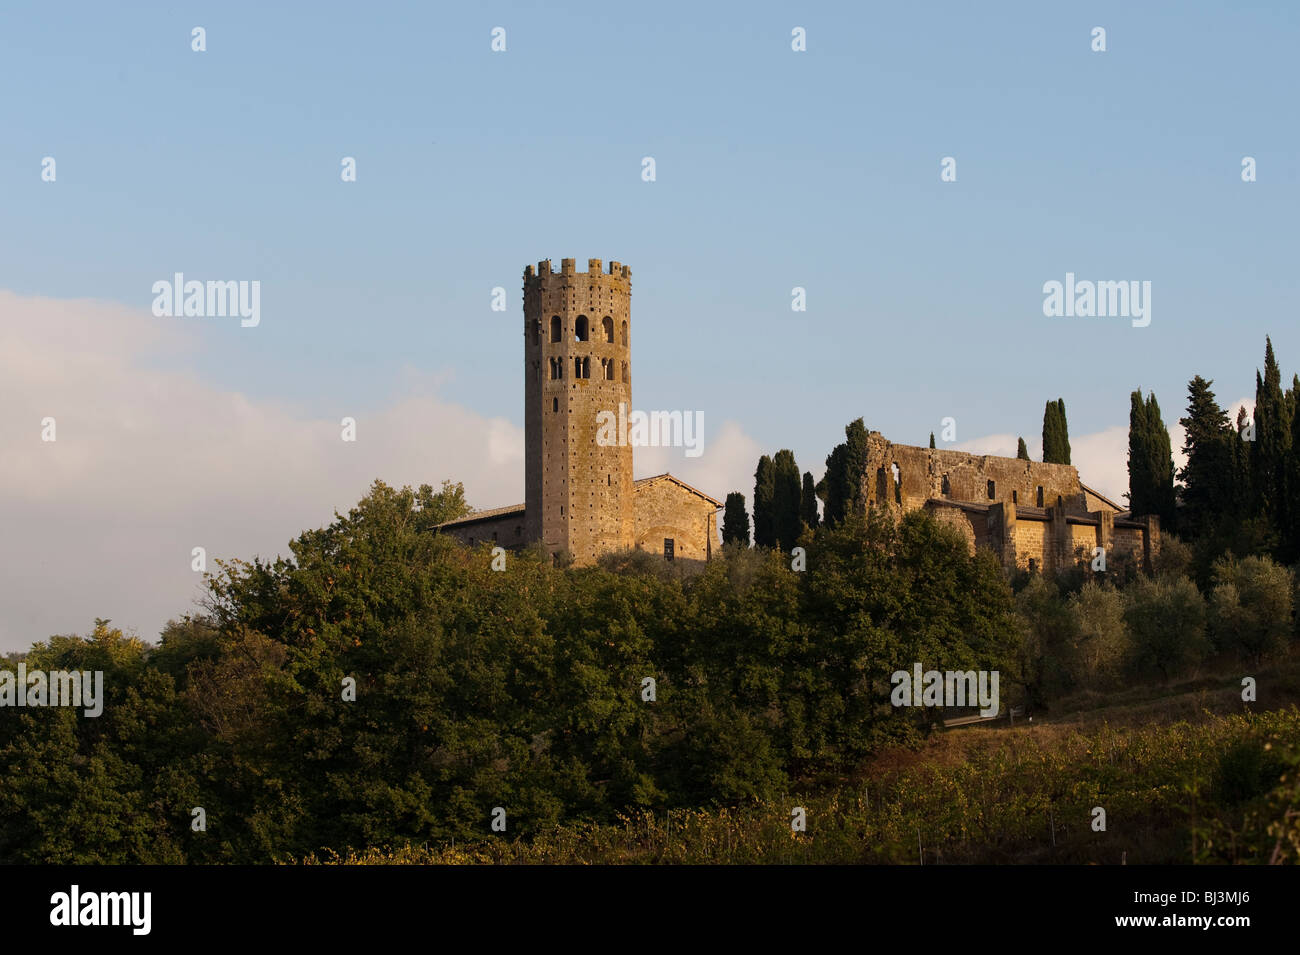 Monasterio Labadia, Orvieto, Umbria, Italy, Europe Stock Photo